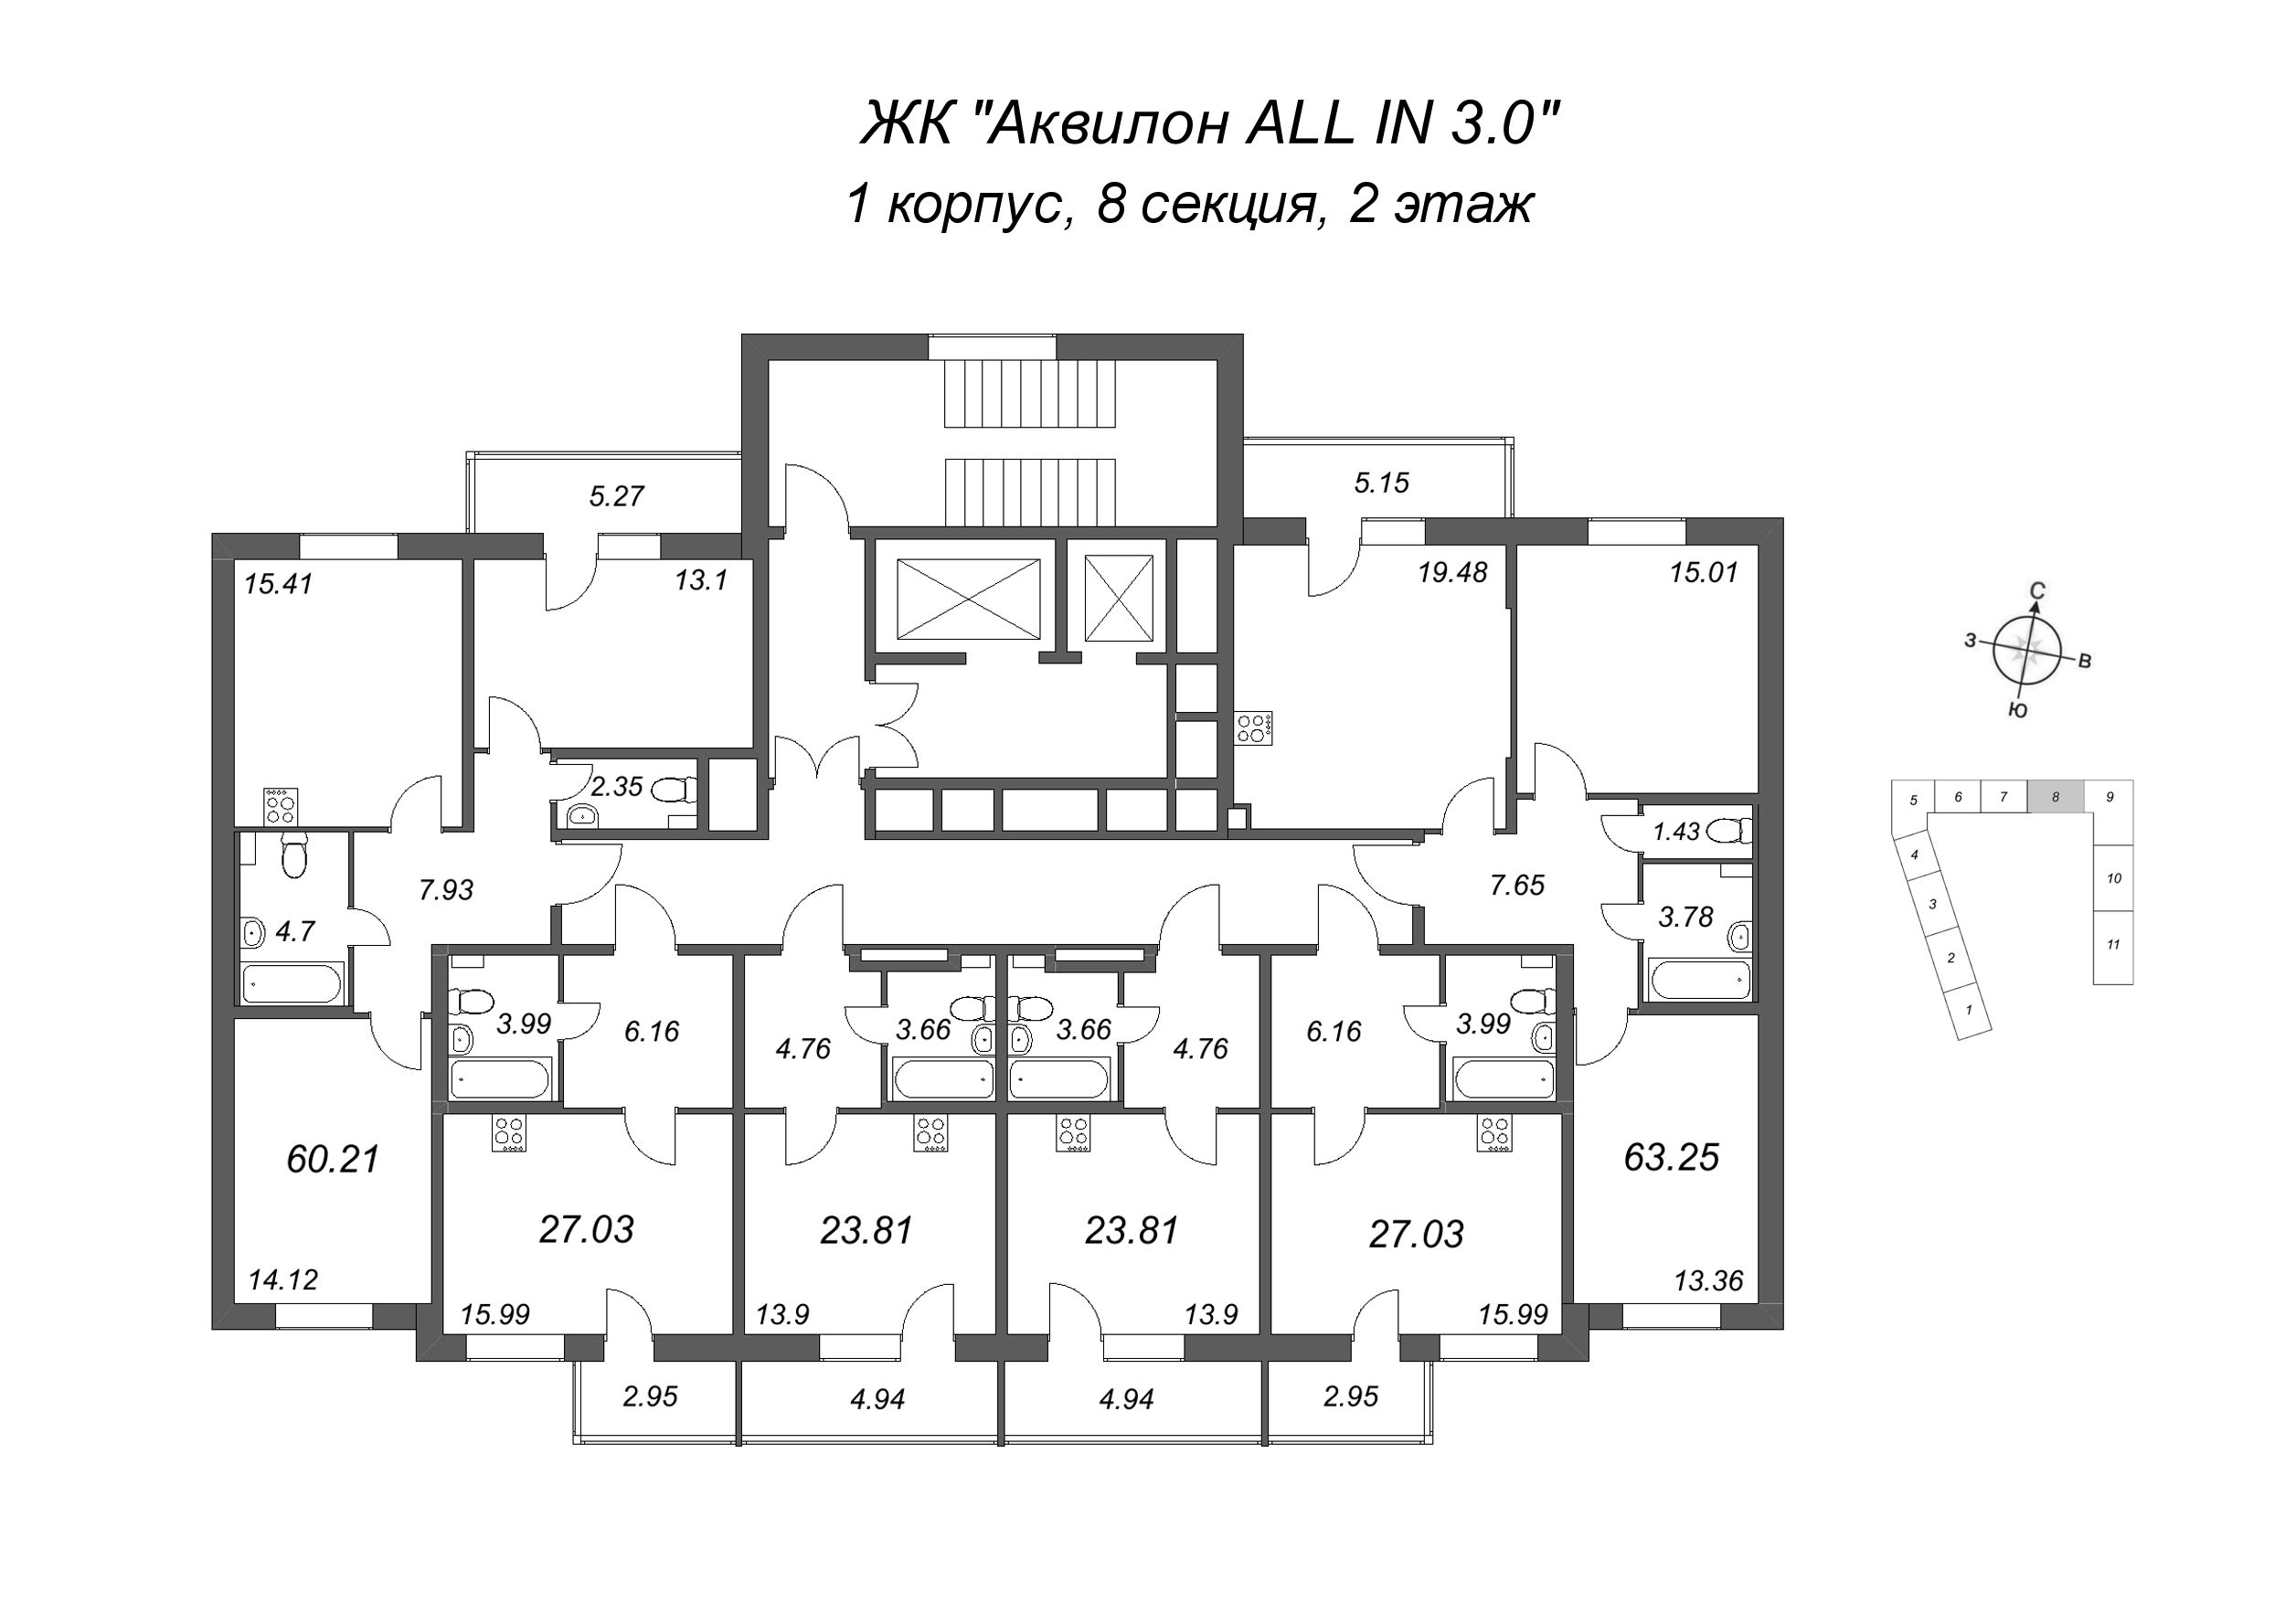 3-комнатная (Евро) квартира, 63.25 м² - планировка этажа